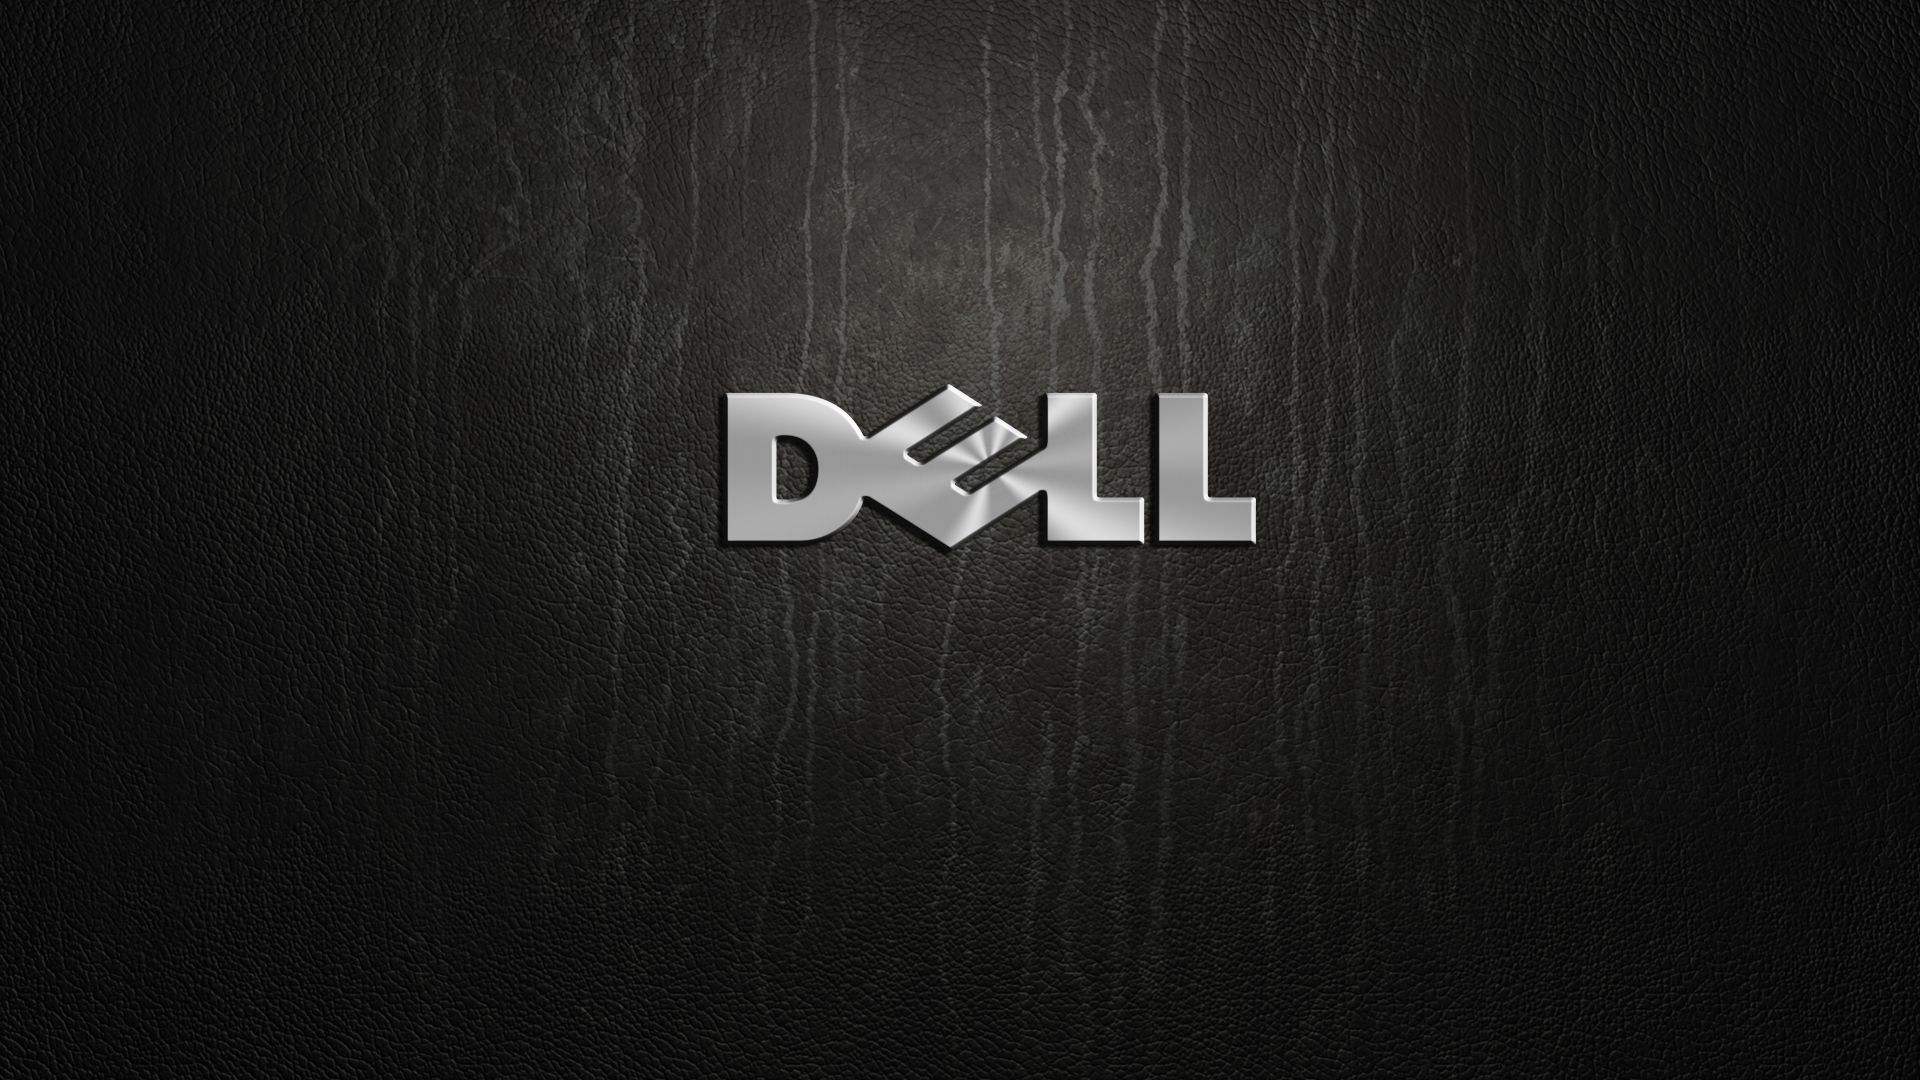 1080p Wallpaper  Dell